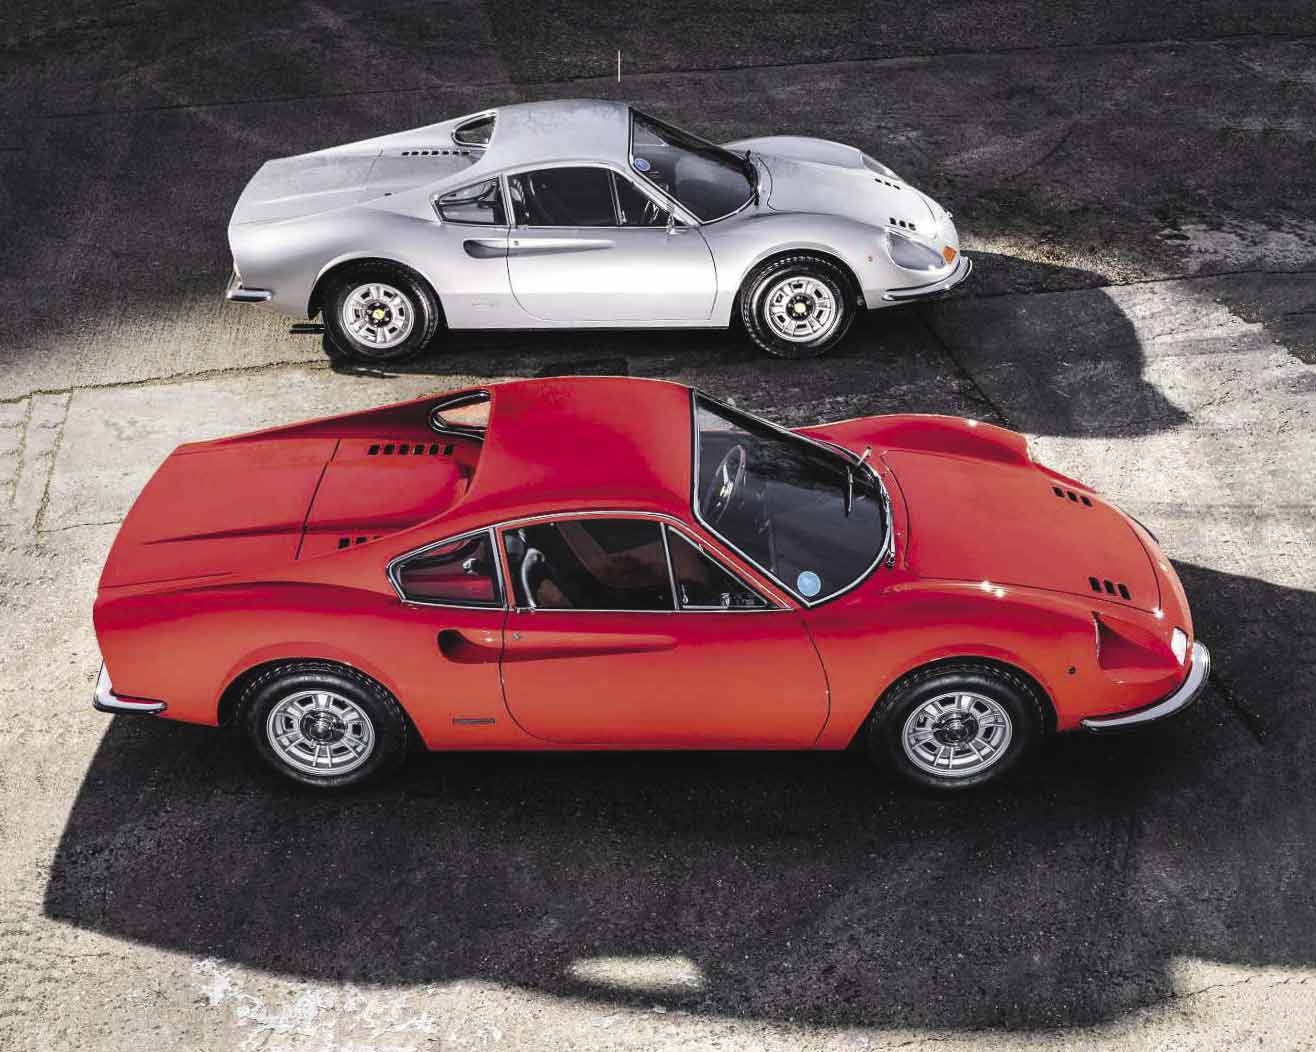 1968 Ferrari Dino 206 GT vs. 1970 Dino 246 GT